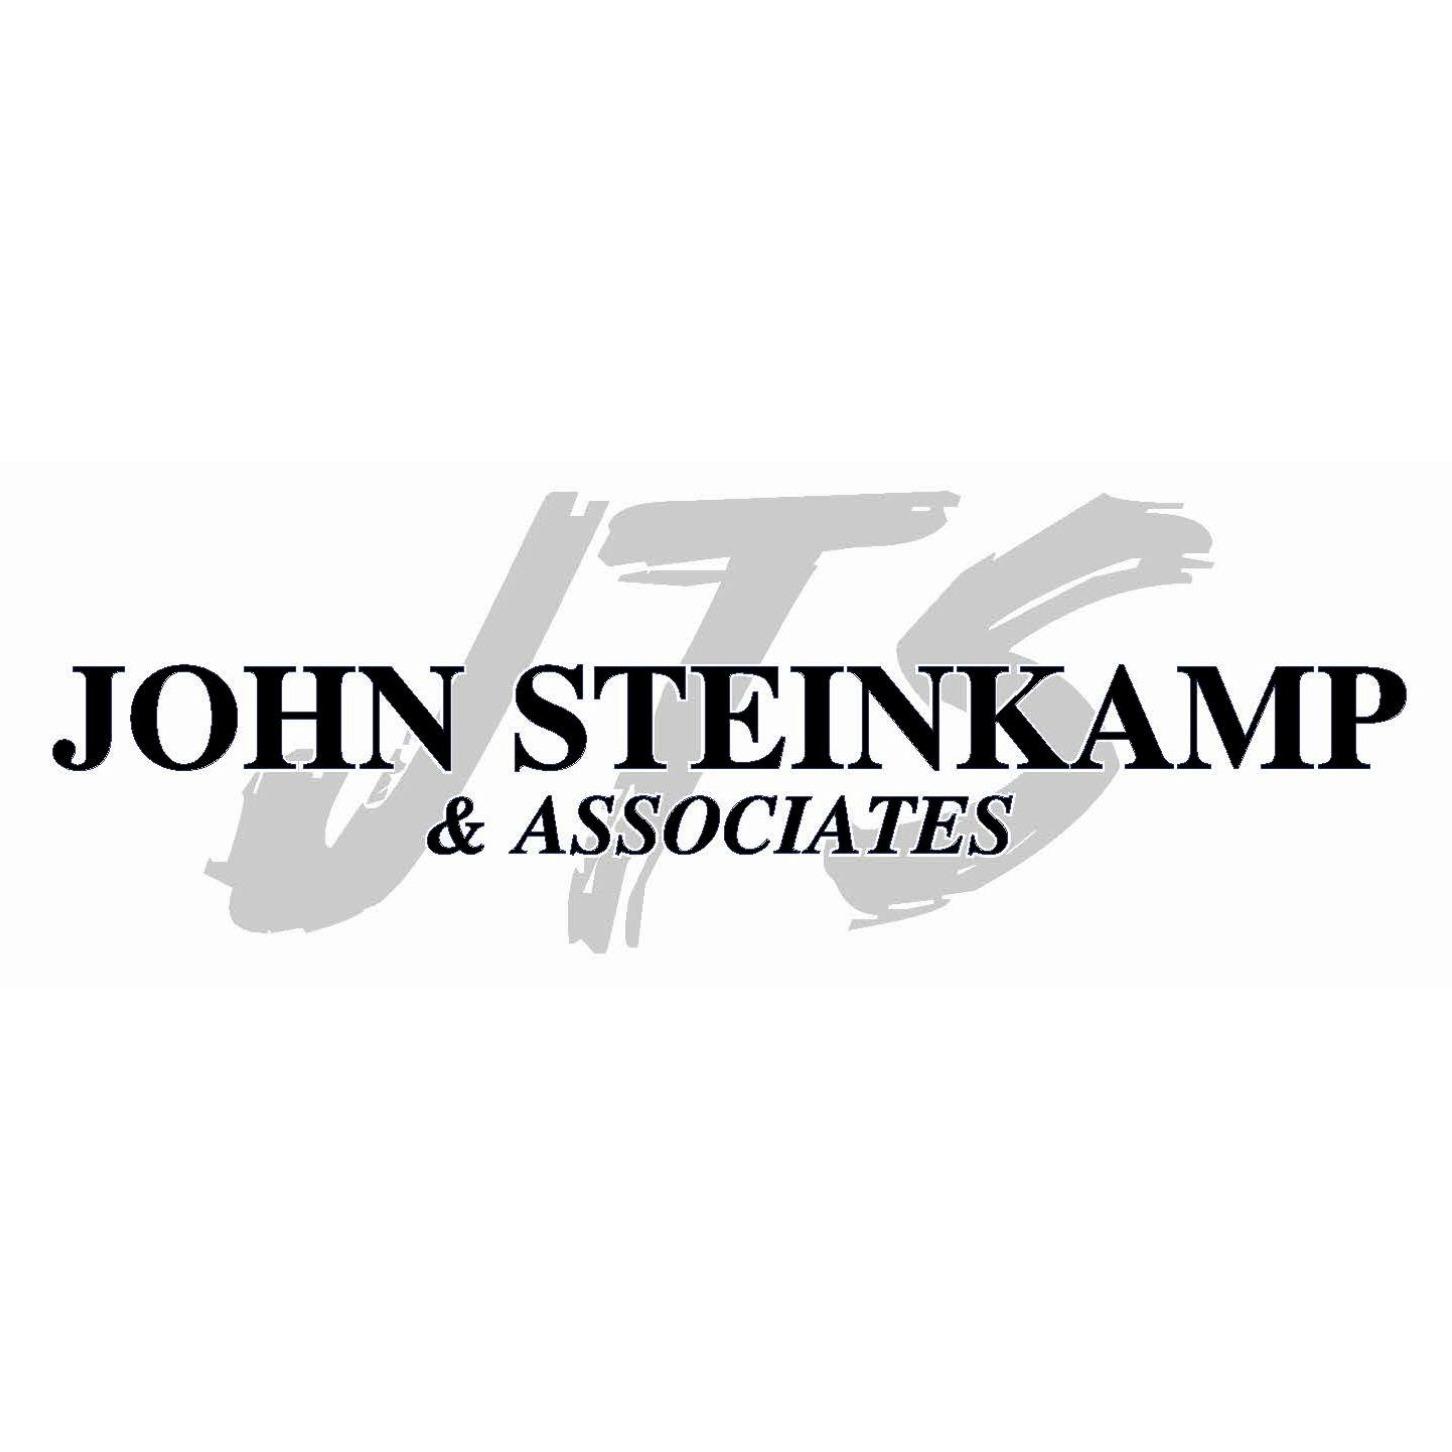 John Steinkamp and Associates